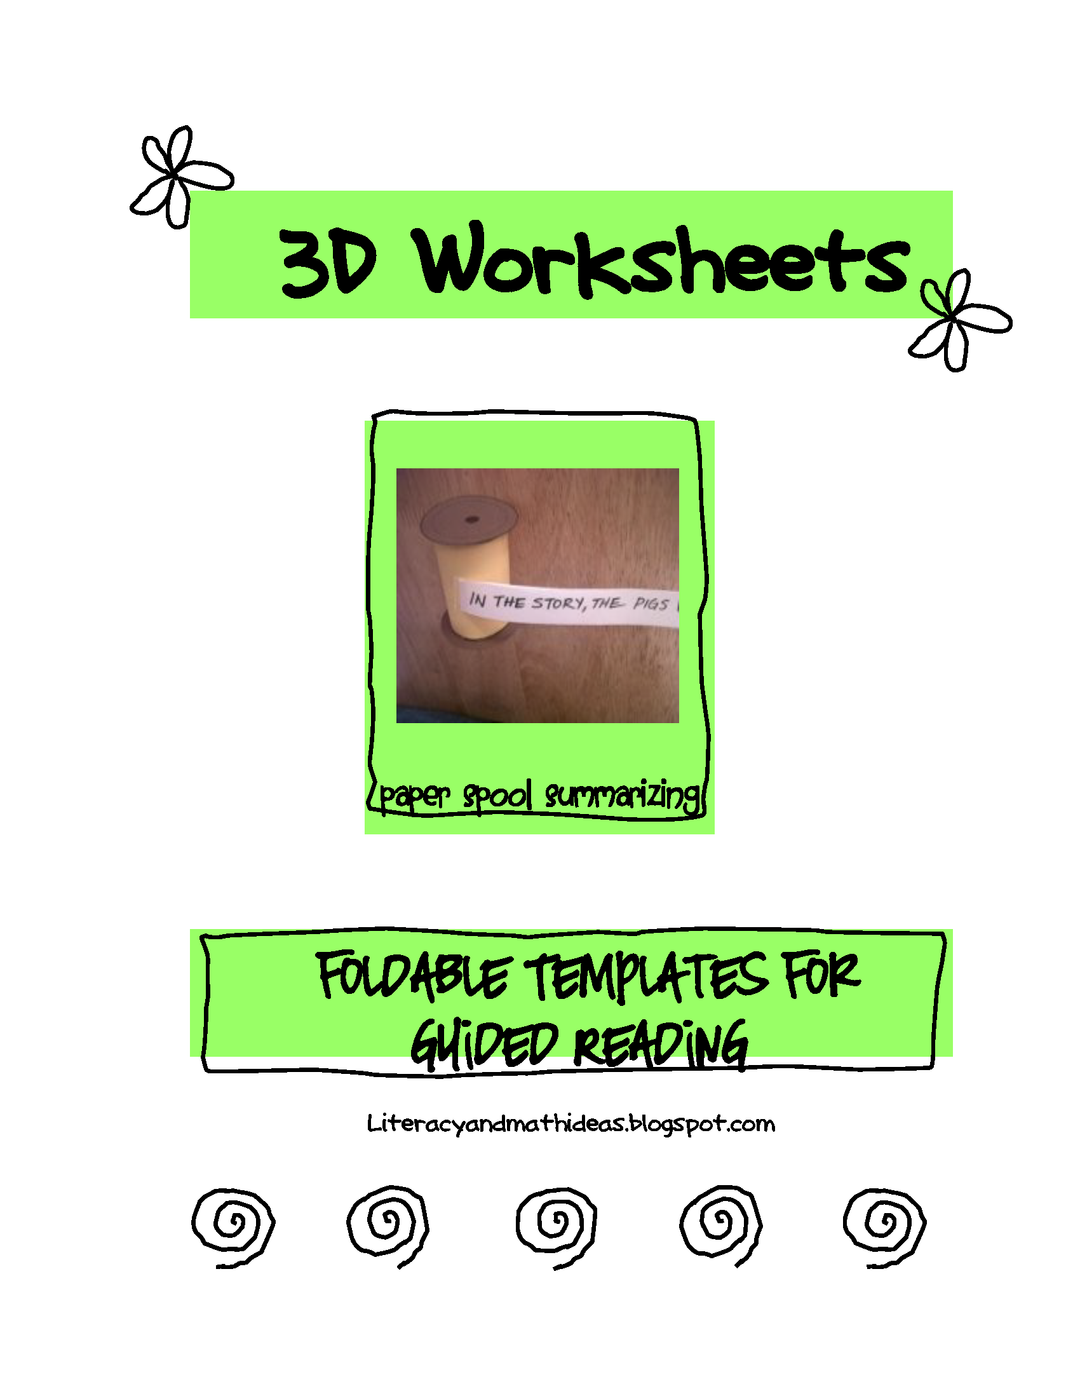 Free Reading Response Templates: 3D Worksheets!